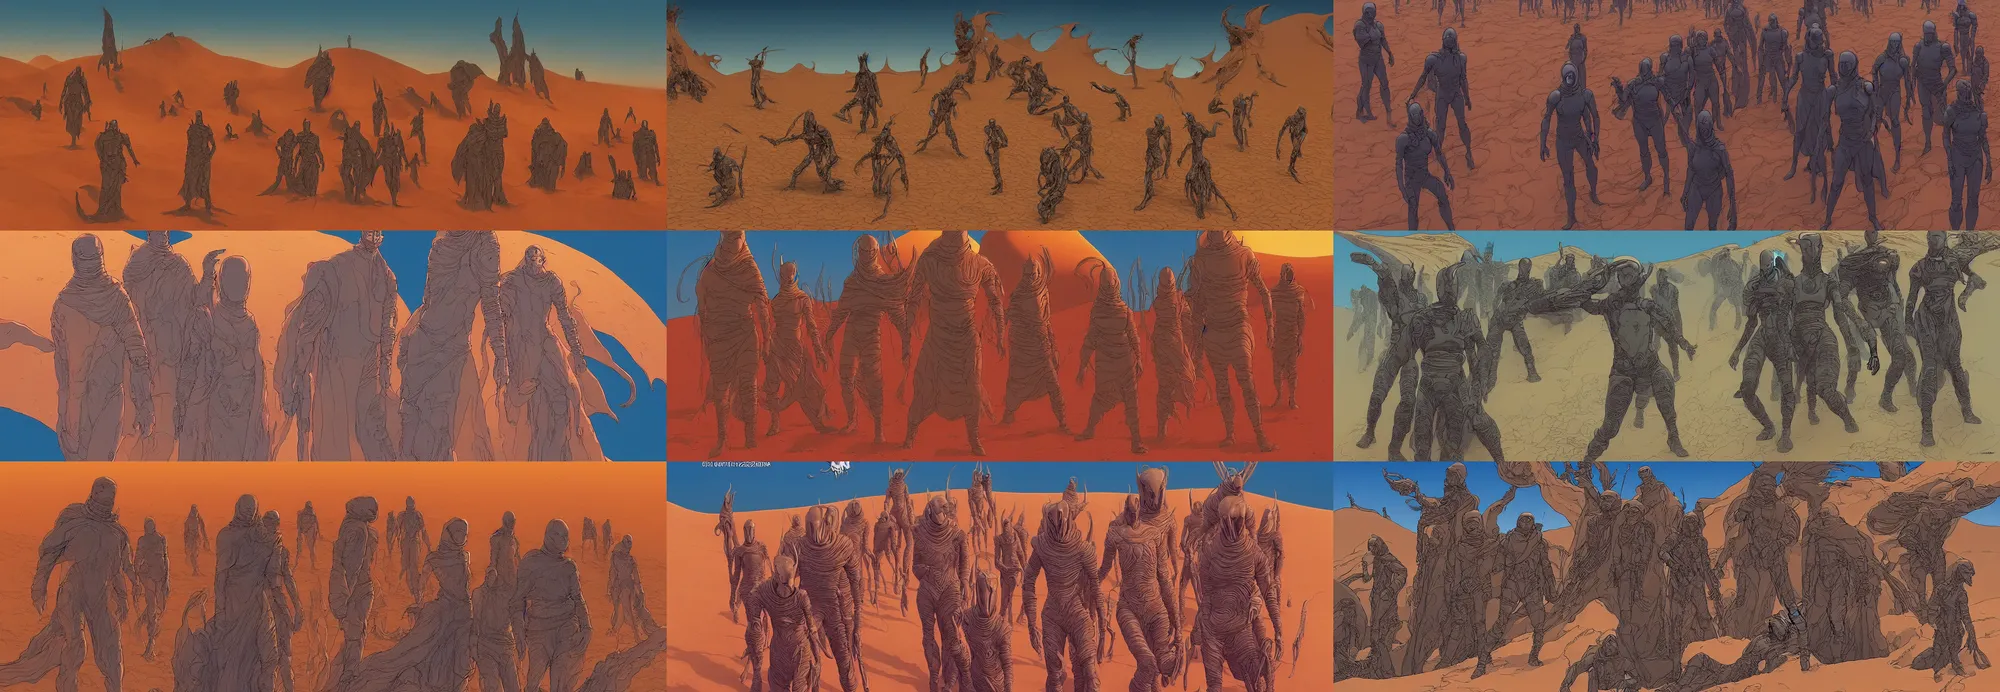 Prompt: dune 2021 by Denis Villeneuve but the Fremen are redesigned to be imaginative creative inhuman aliens, blue desert sand in alien world, art by moebius, Jean Giraud, cinematic, widescreen, 4k